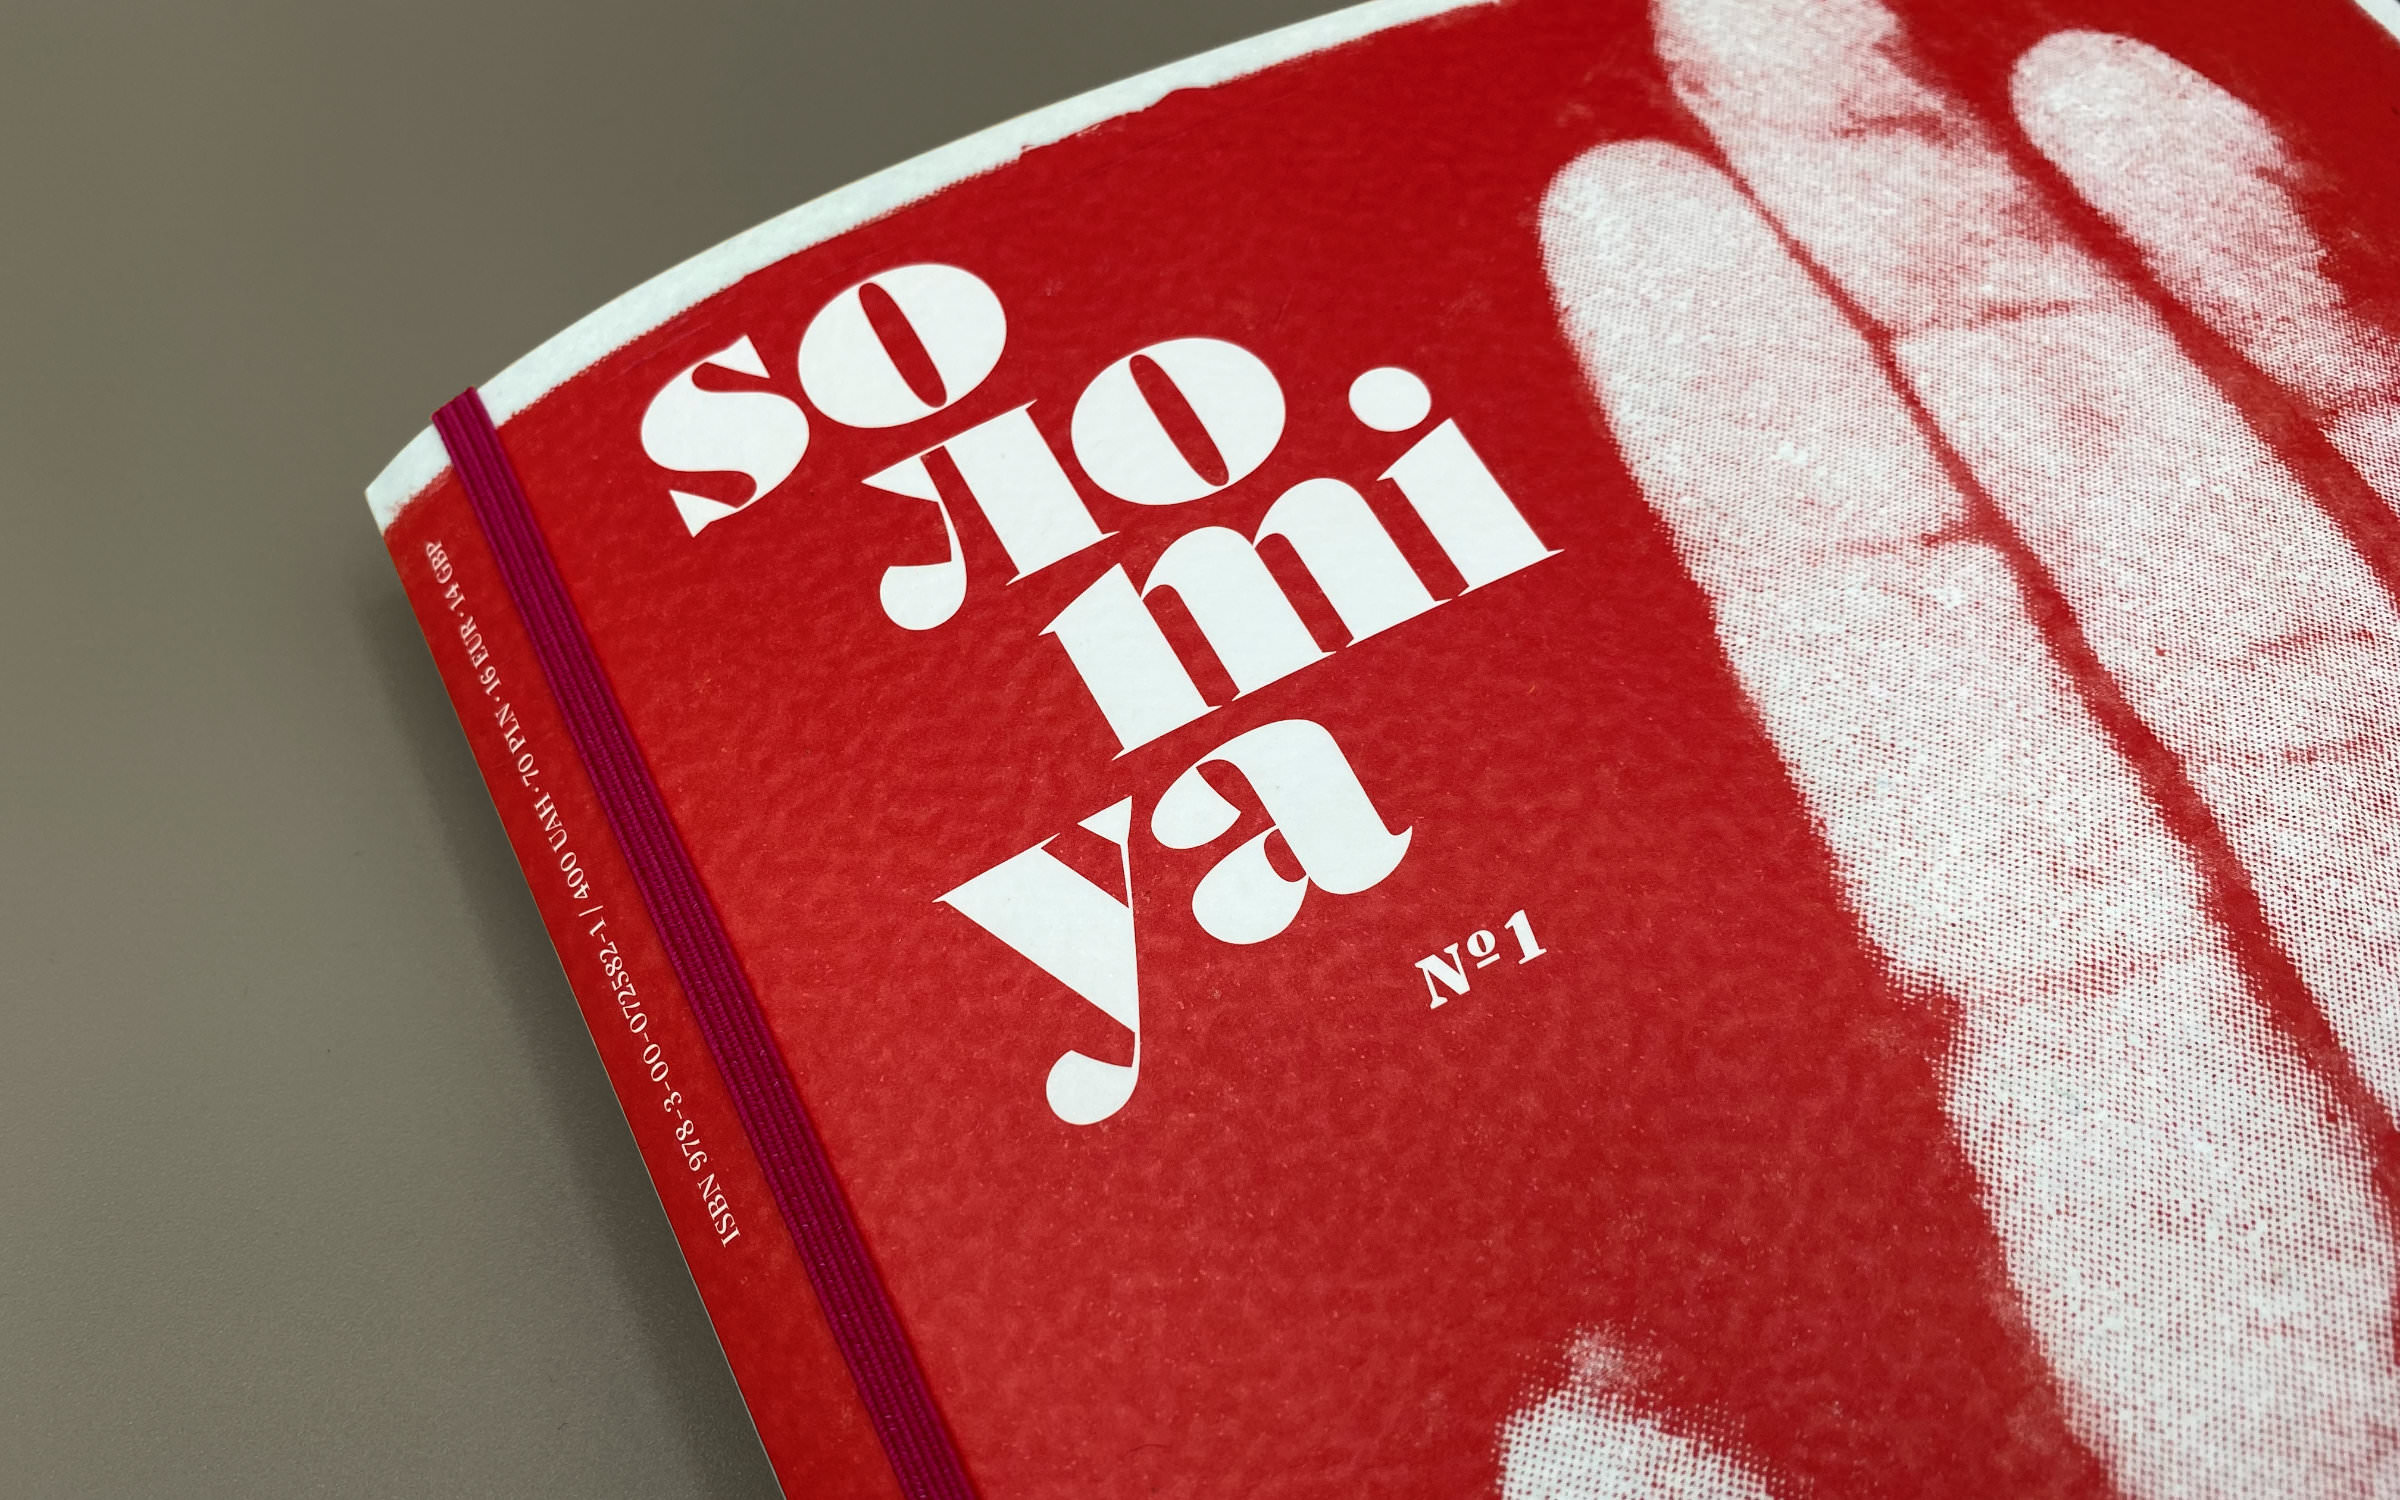 Soлomiya’s cover using Nice Poster